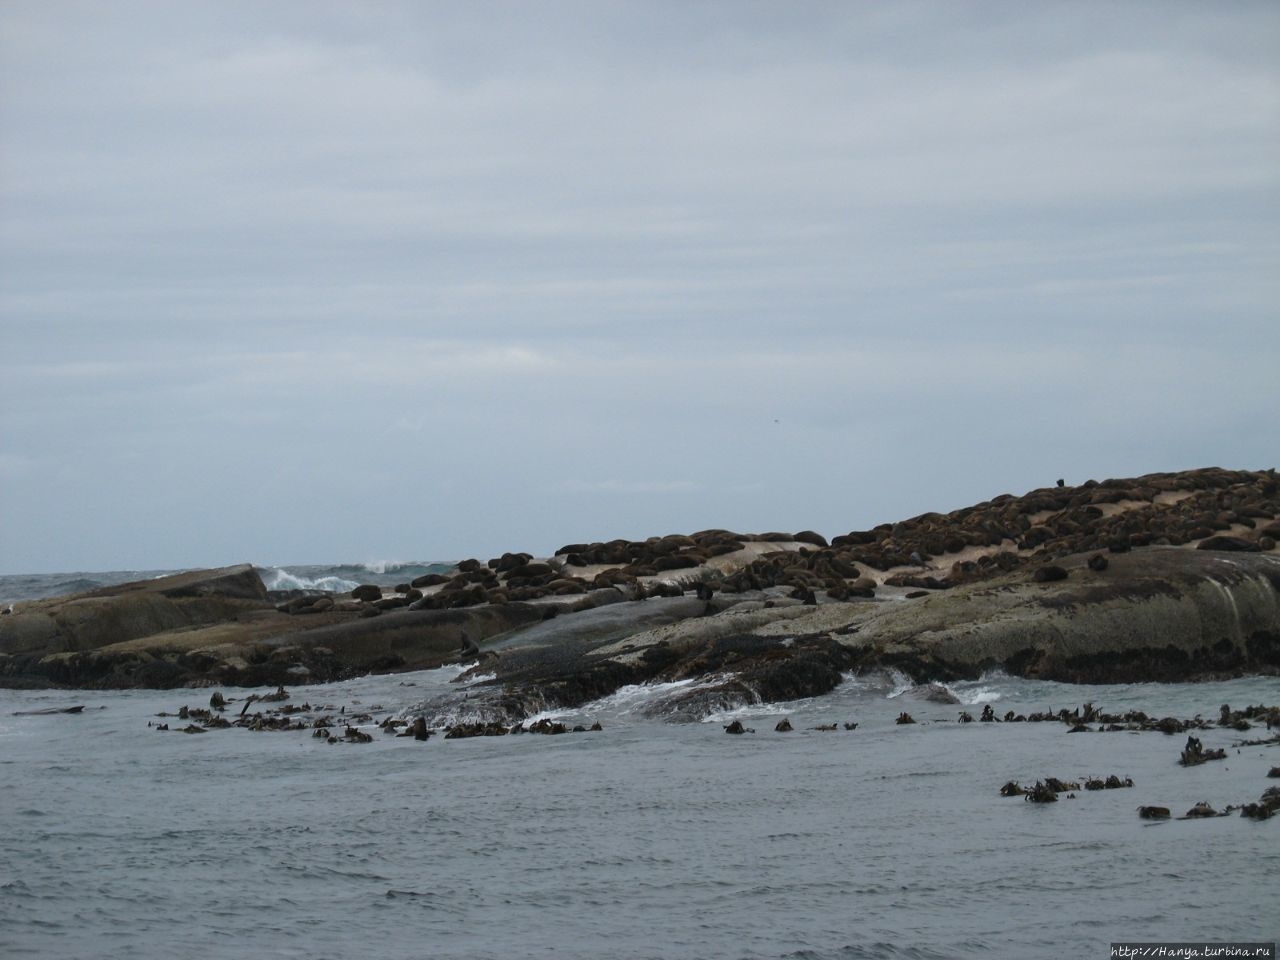 Капский полуостров:Seal Island Cruise к морским котикам. Ч79